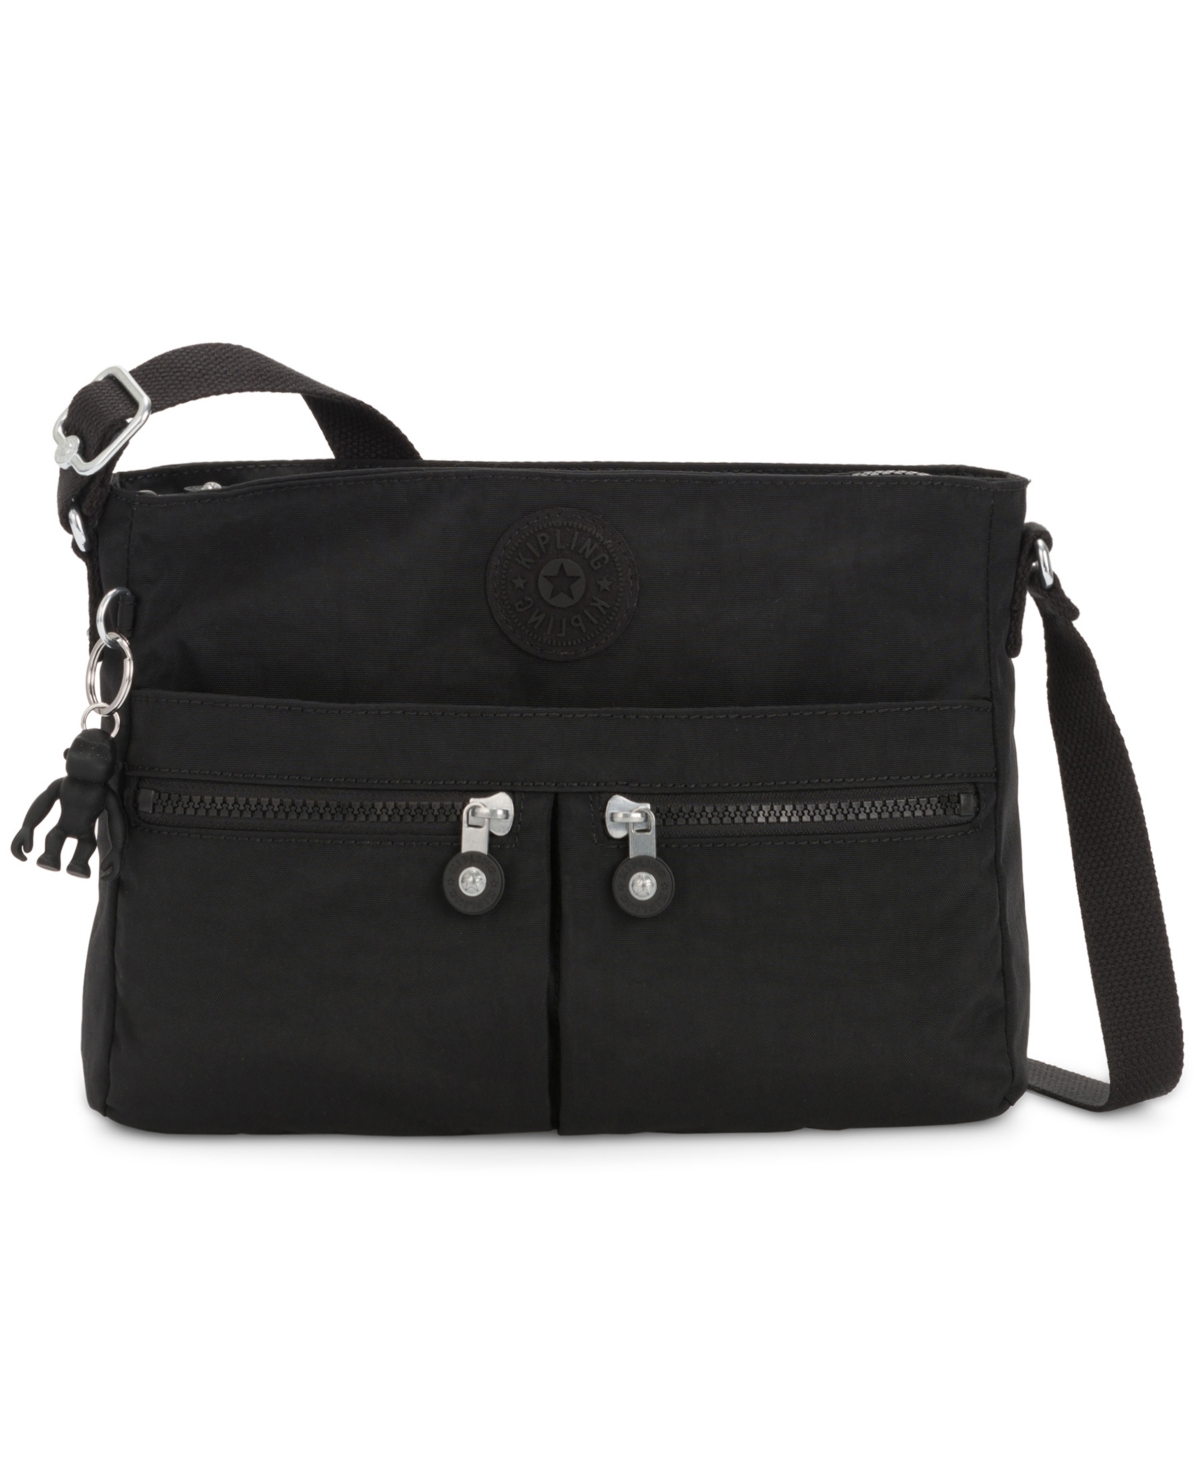 Kipling New Angie Handbag In Black Noir